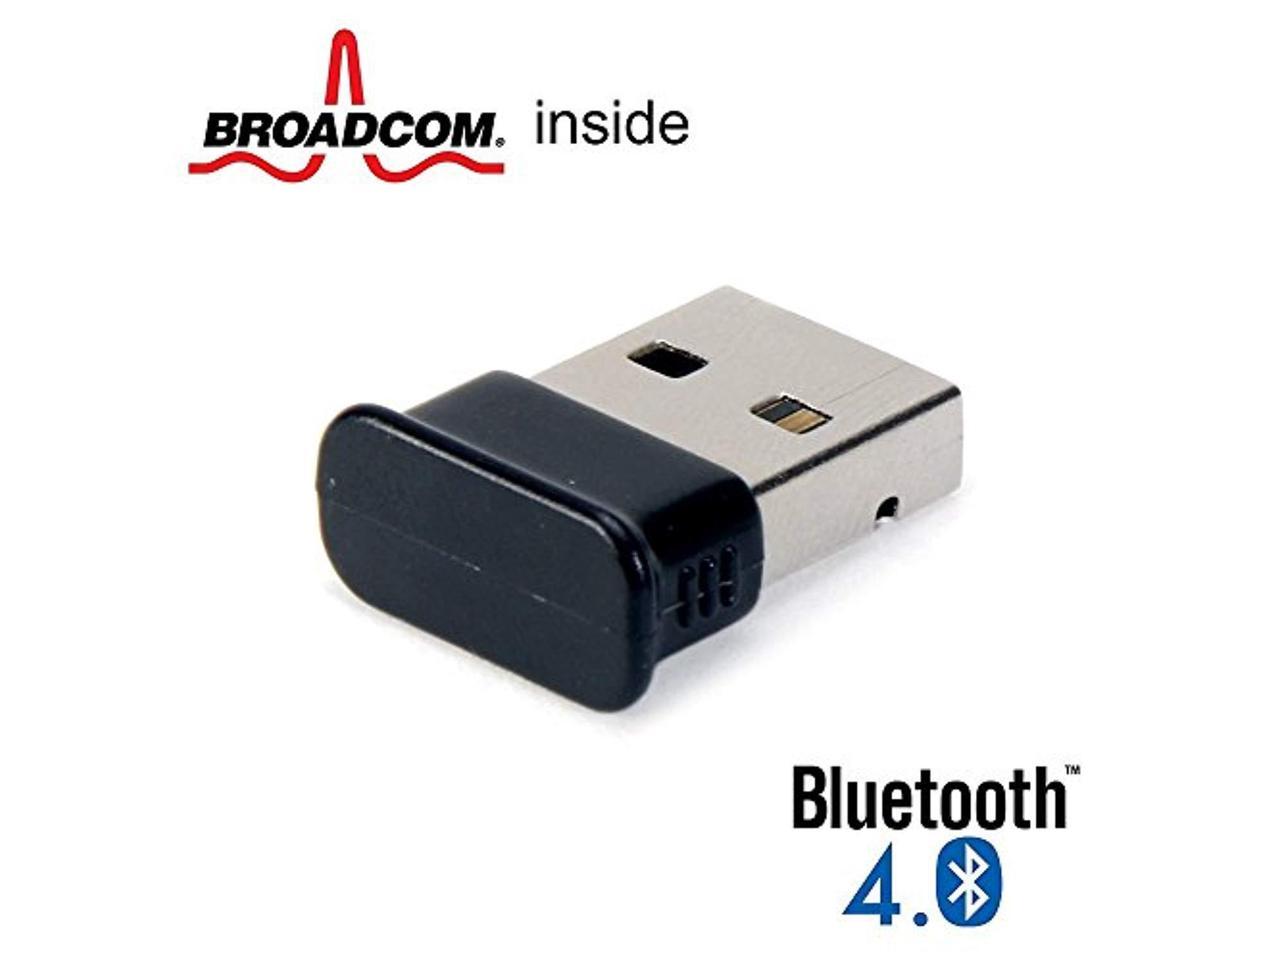 Ultra-Mini USB Broadcom BCM20702 Class 2 Bluetooth V4.0 Dual Mode Dongle Wireless Adapter with LED GMYLE Bluetooth Adapter Dongle 